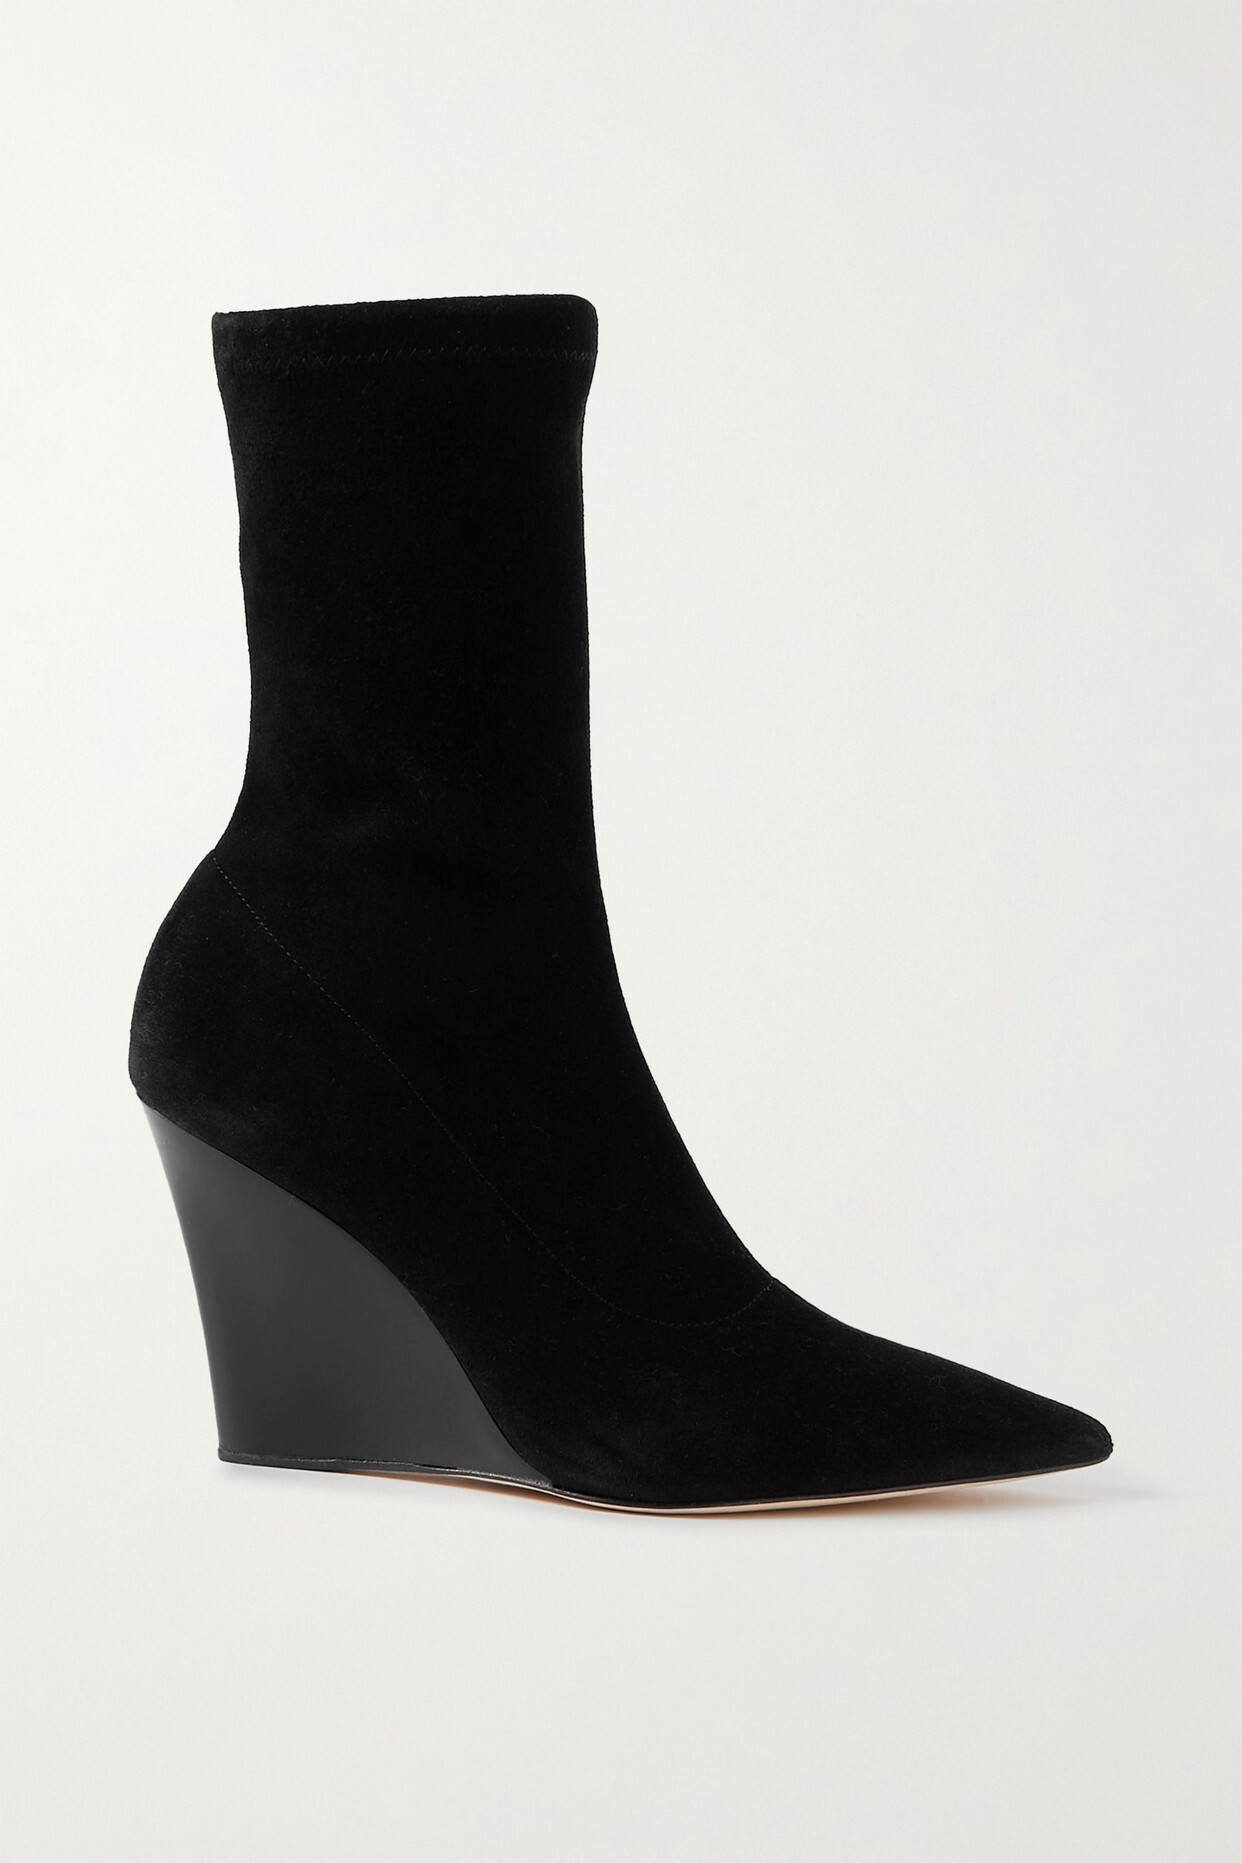 Paris Texas - Wanda Suede Wedge Ankle Boots - Black